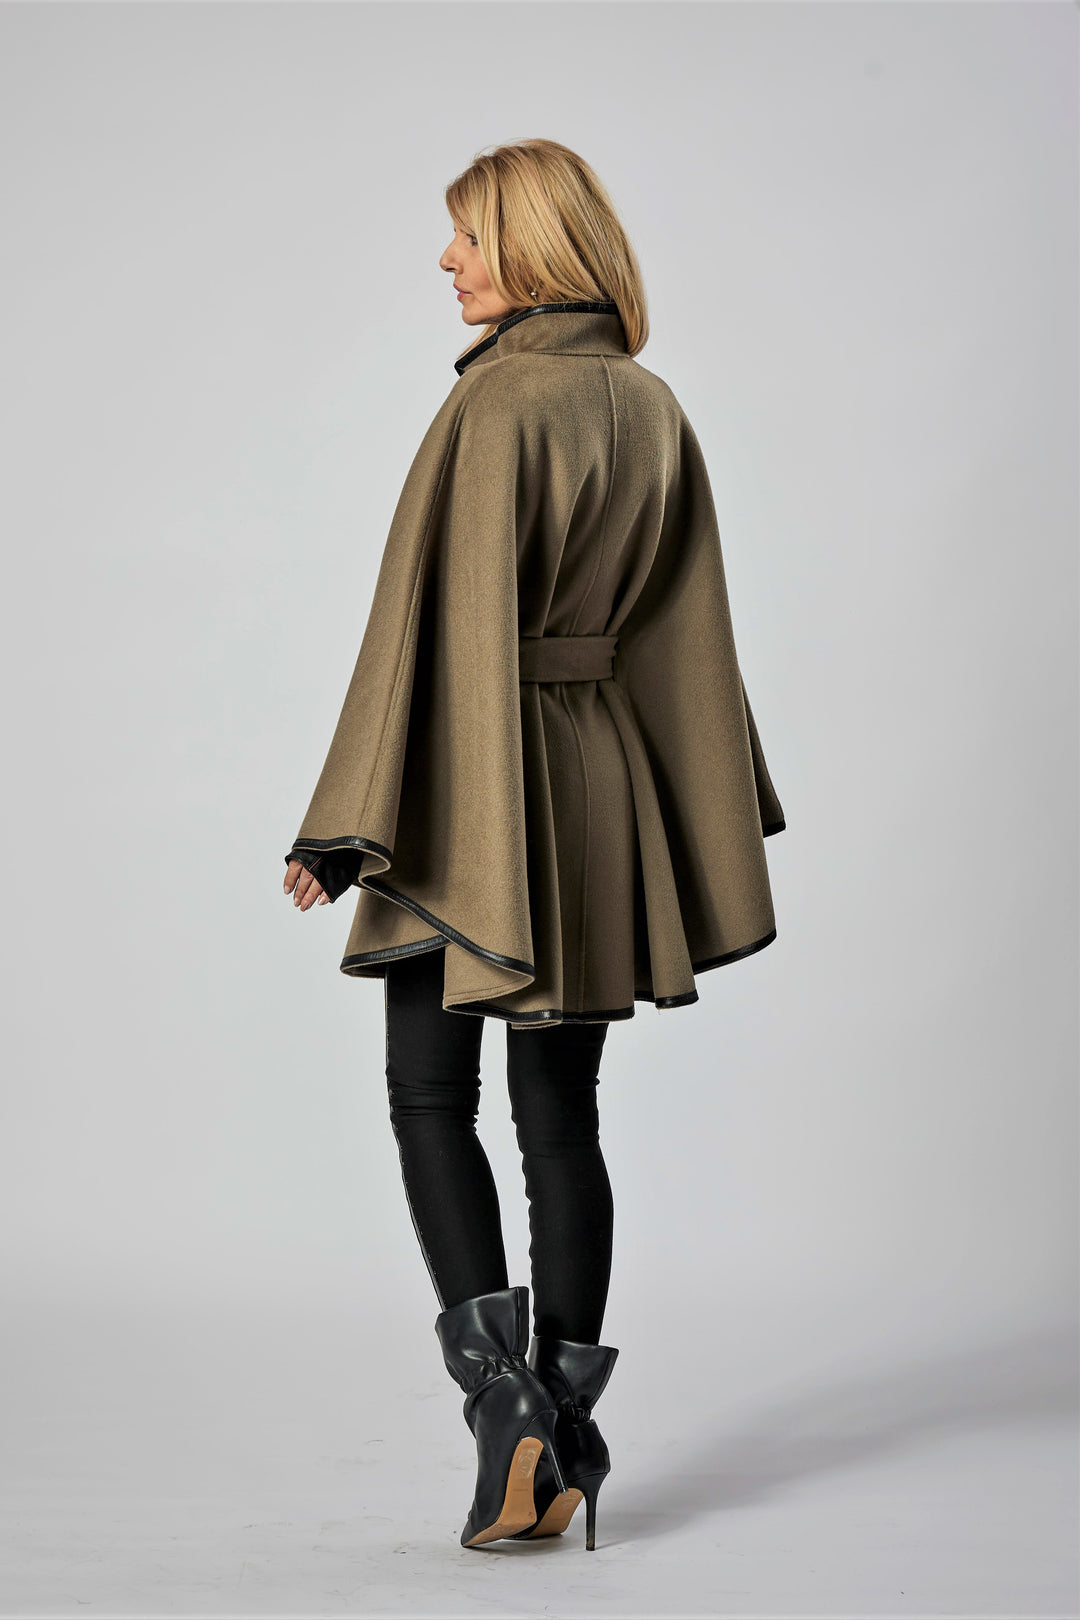 Olive Green Italian 100% cashmere wool women cape coat swing classic elegant coat by Alesia Chaika